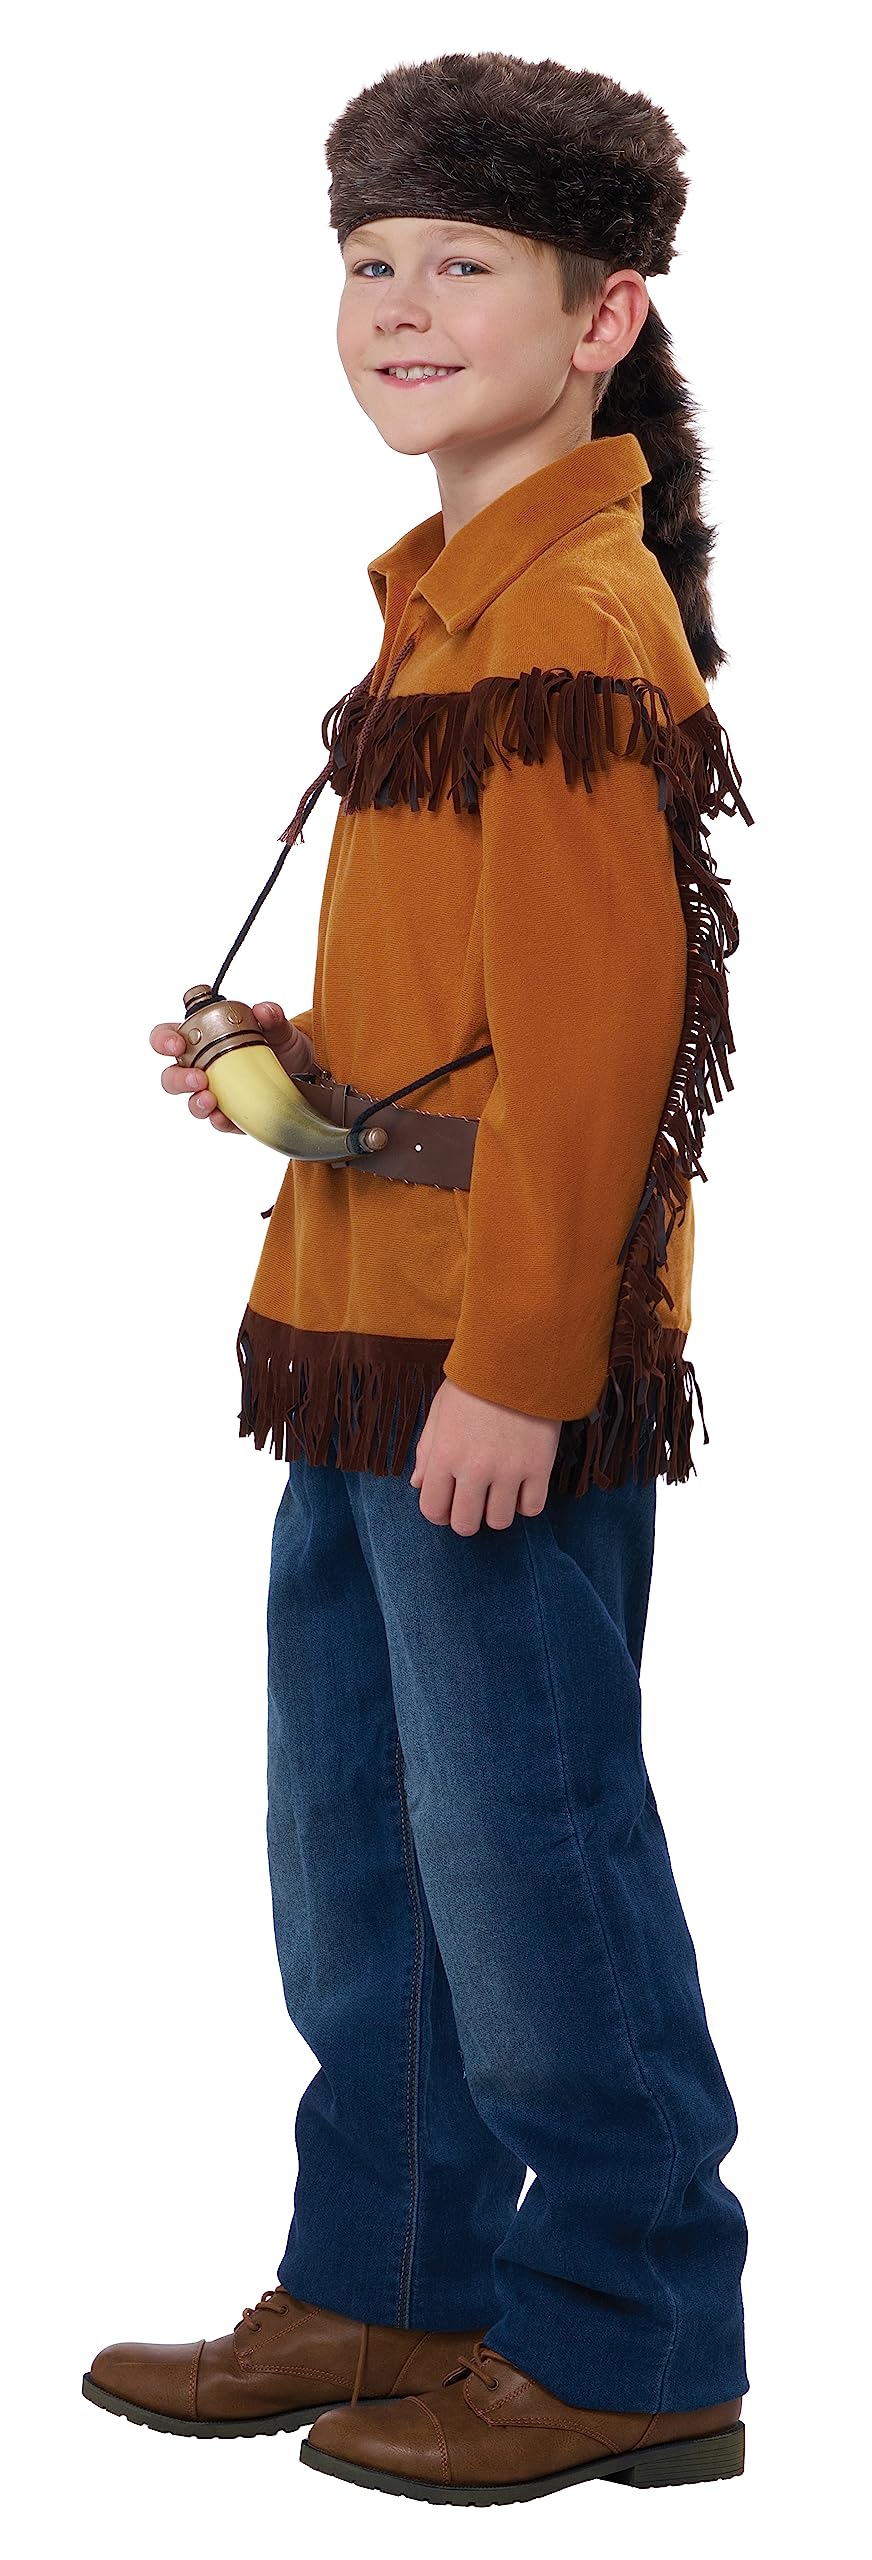 Kids Davy Crockett Costume